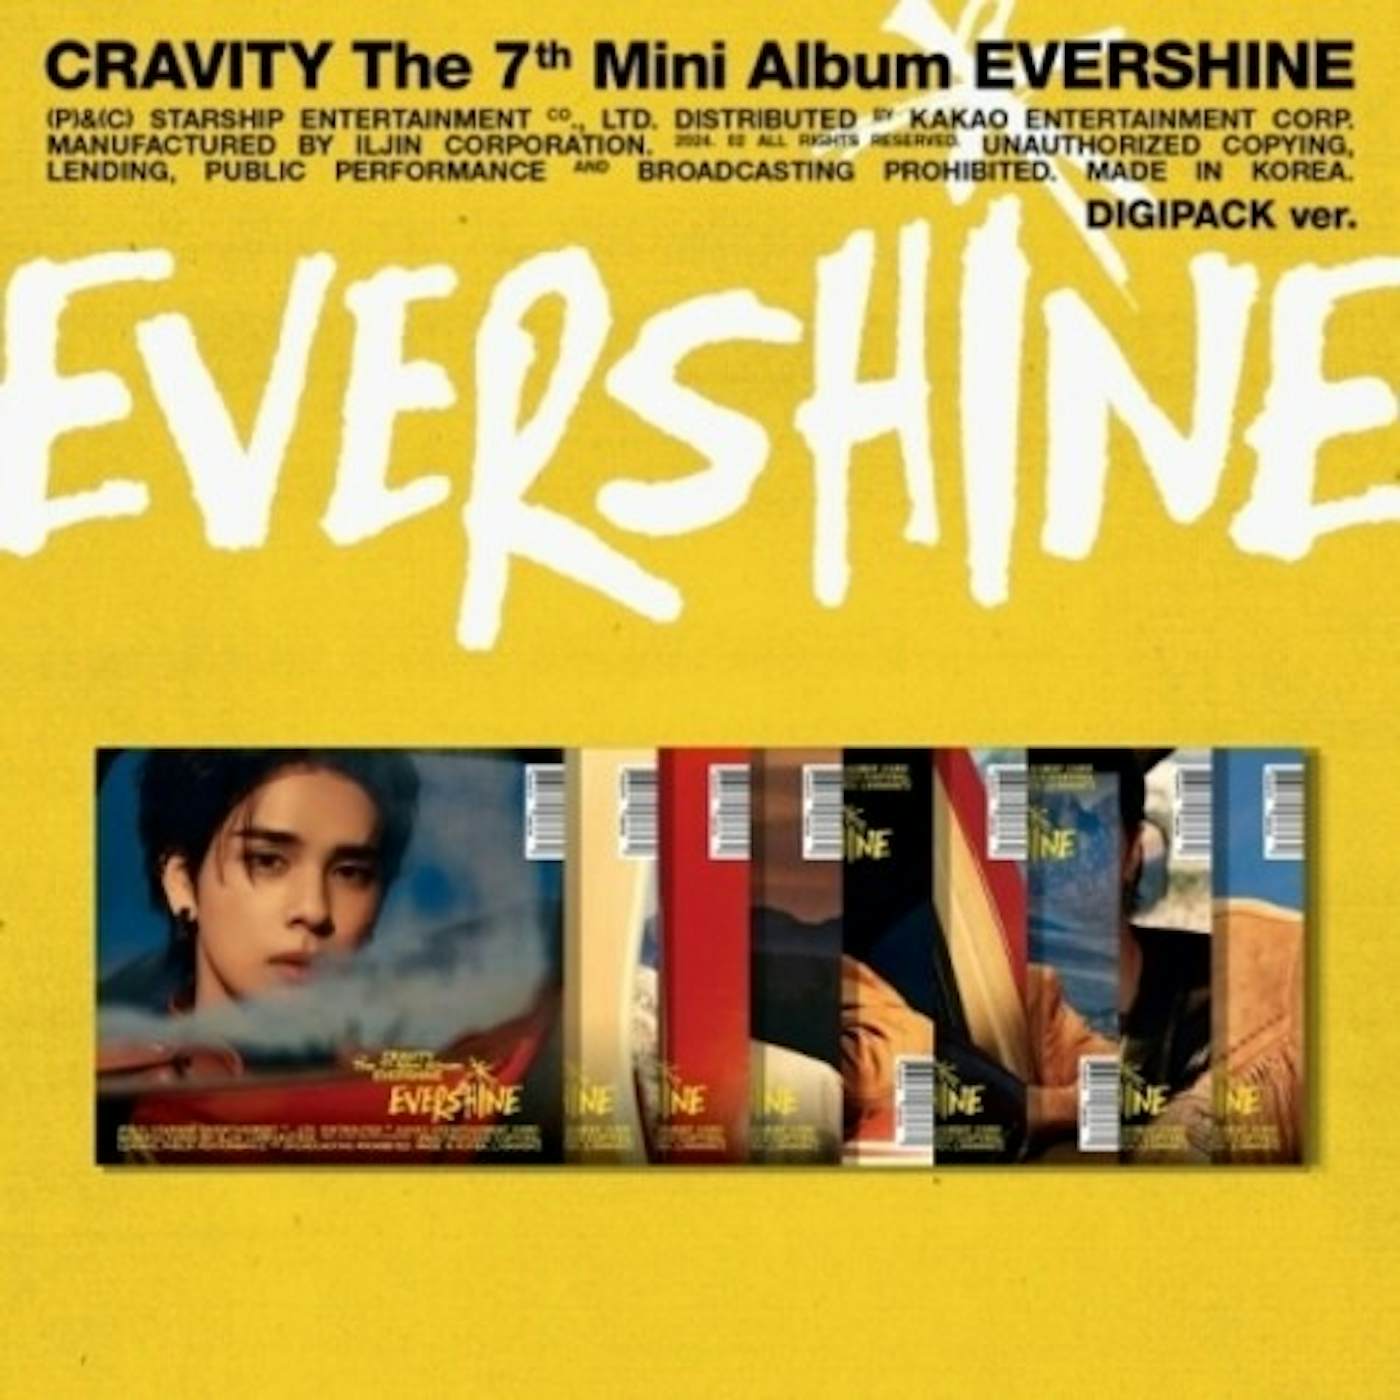 CRAVITY EVERSHINE - RANDOM COVER - DIGIPACK VERSION CD